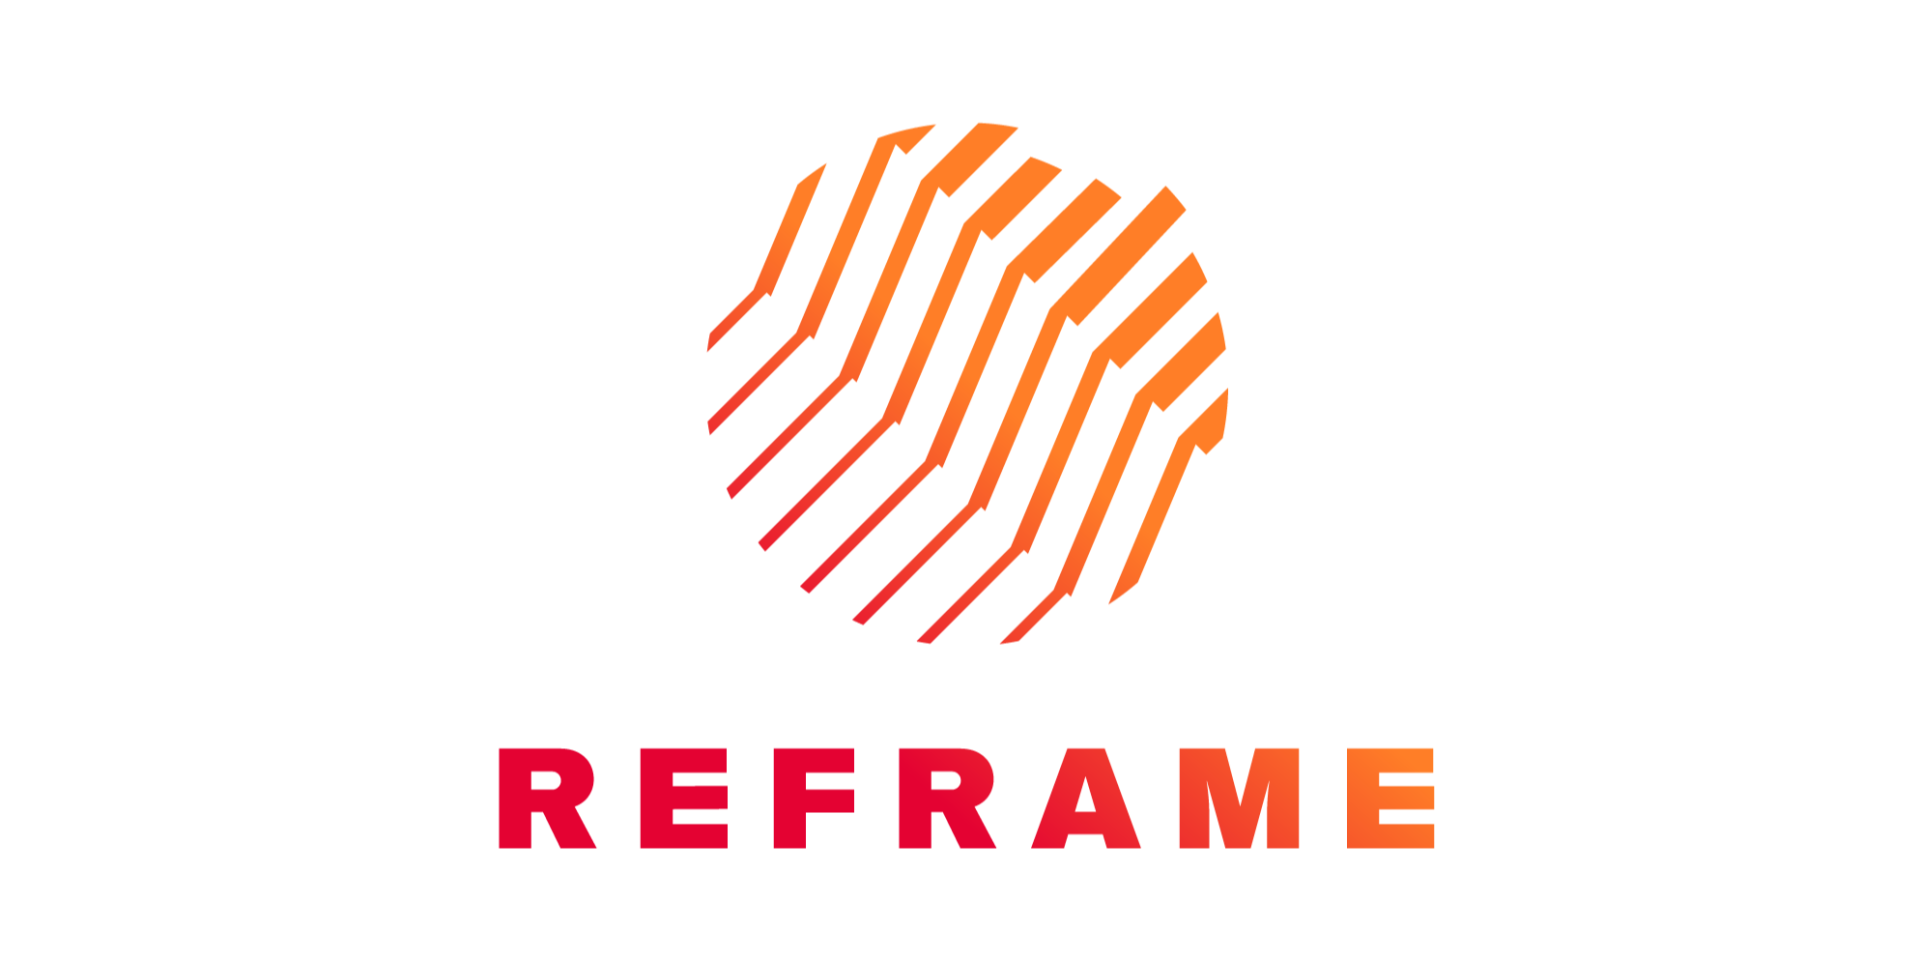 ReFrame red and orange logo